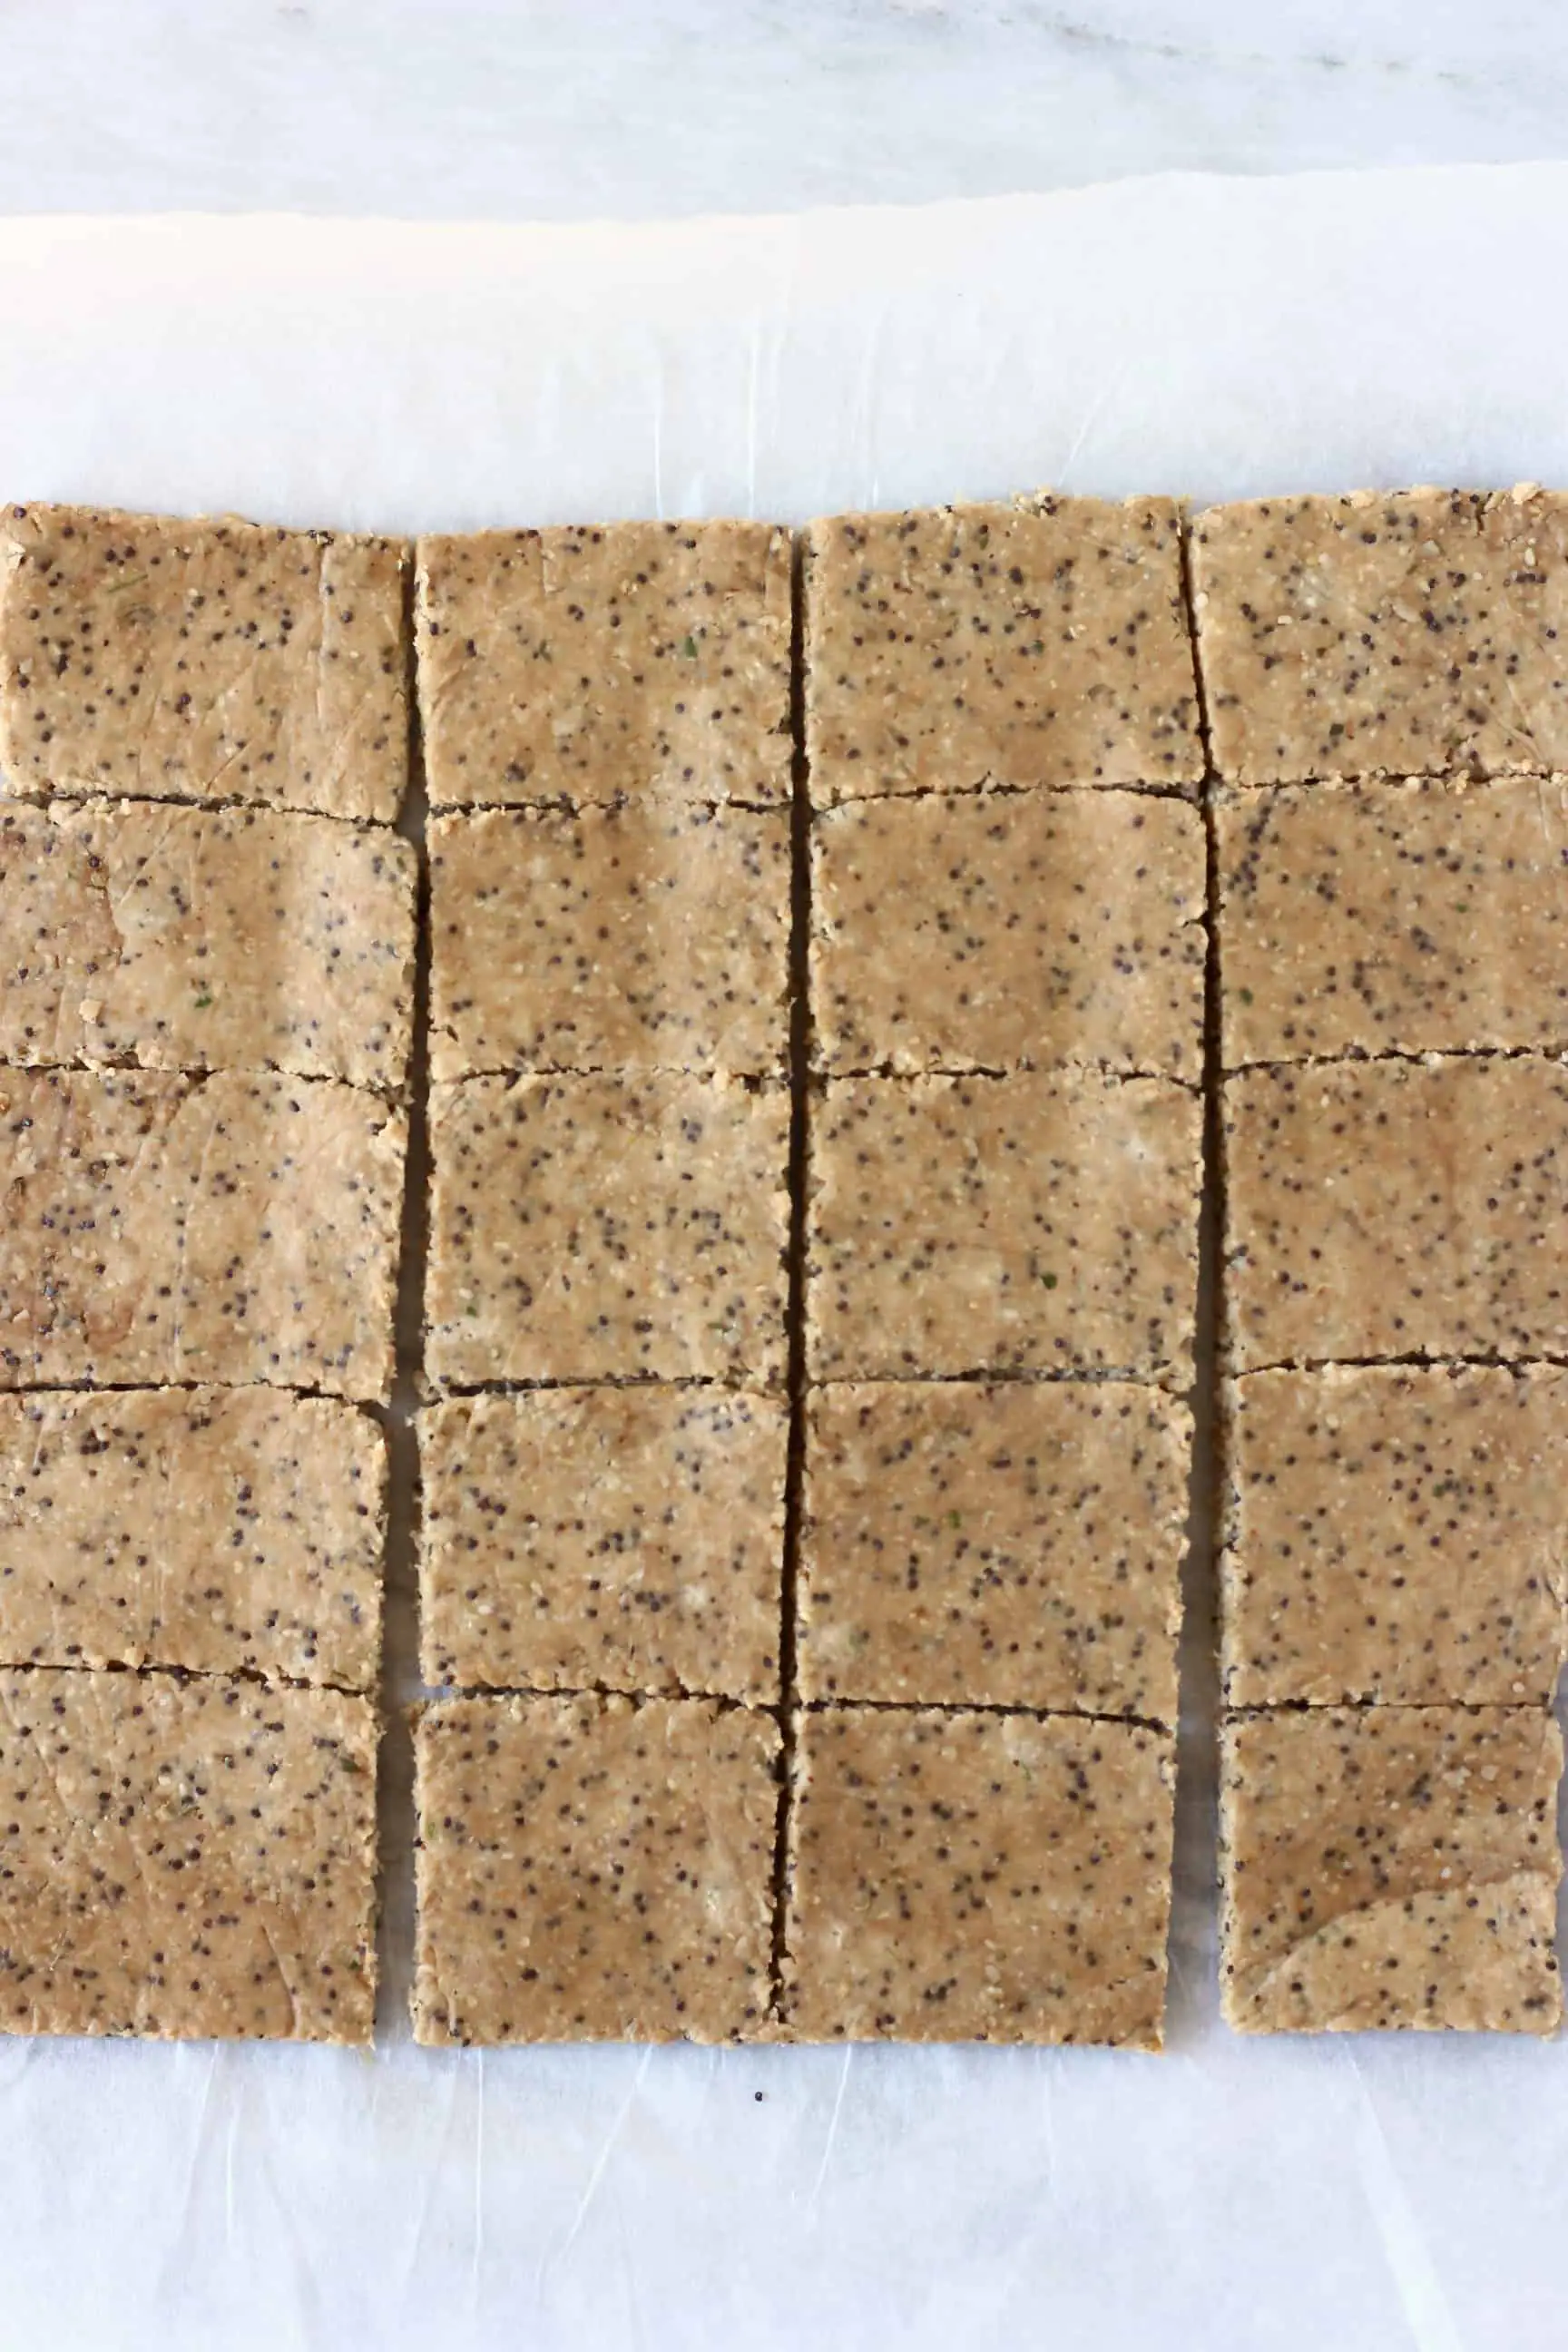 Squares of raw gluten-free vegan cracker mixture on a sheet of baking paper